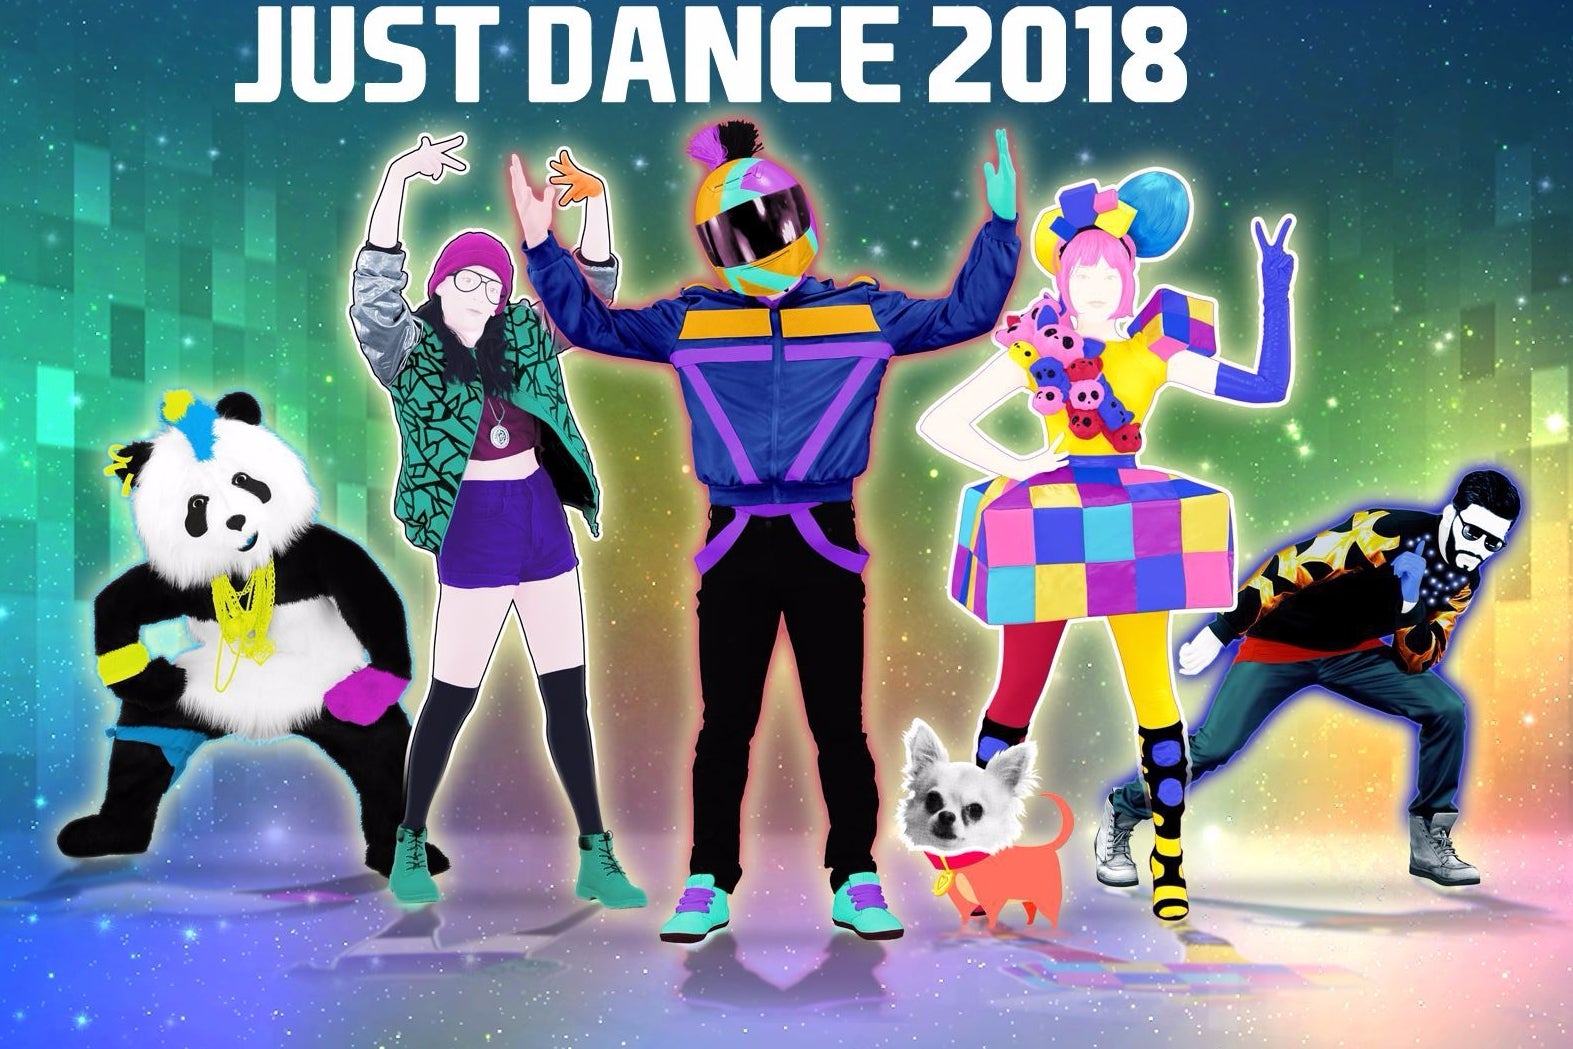 Immagine di Just Dance 2018 nasconde una sorpresa per chi compra la versione per Nintendo Switch